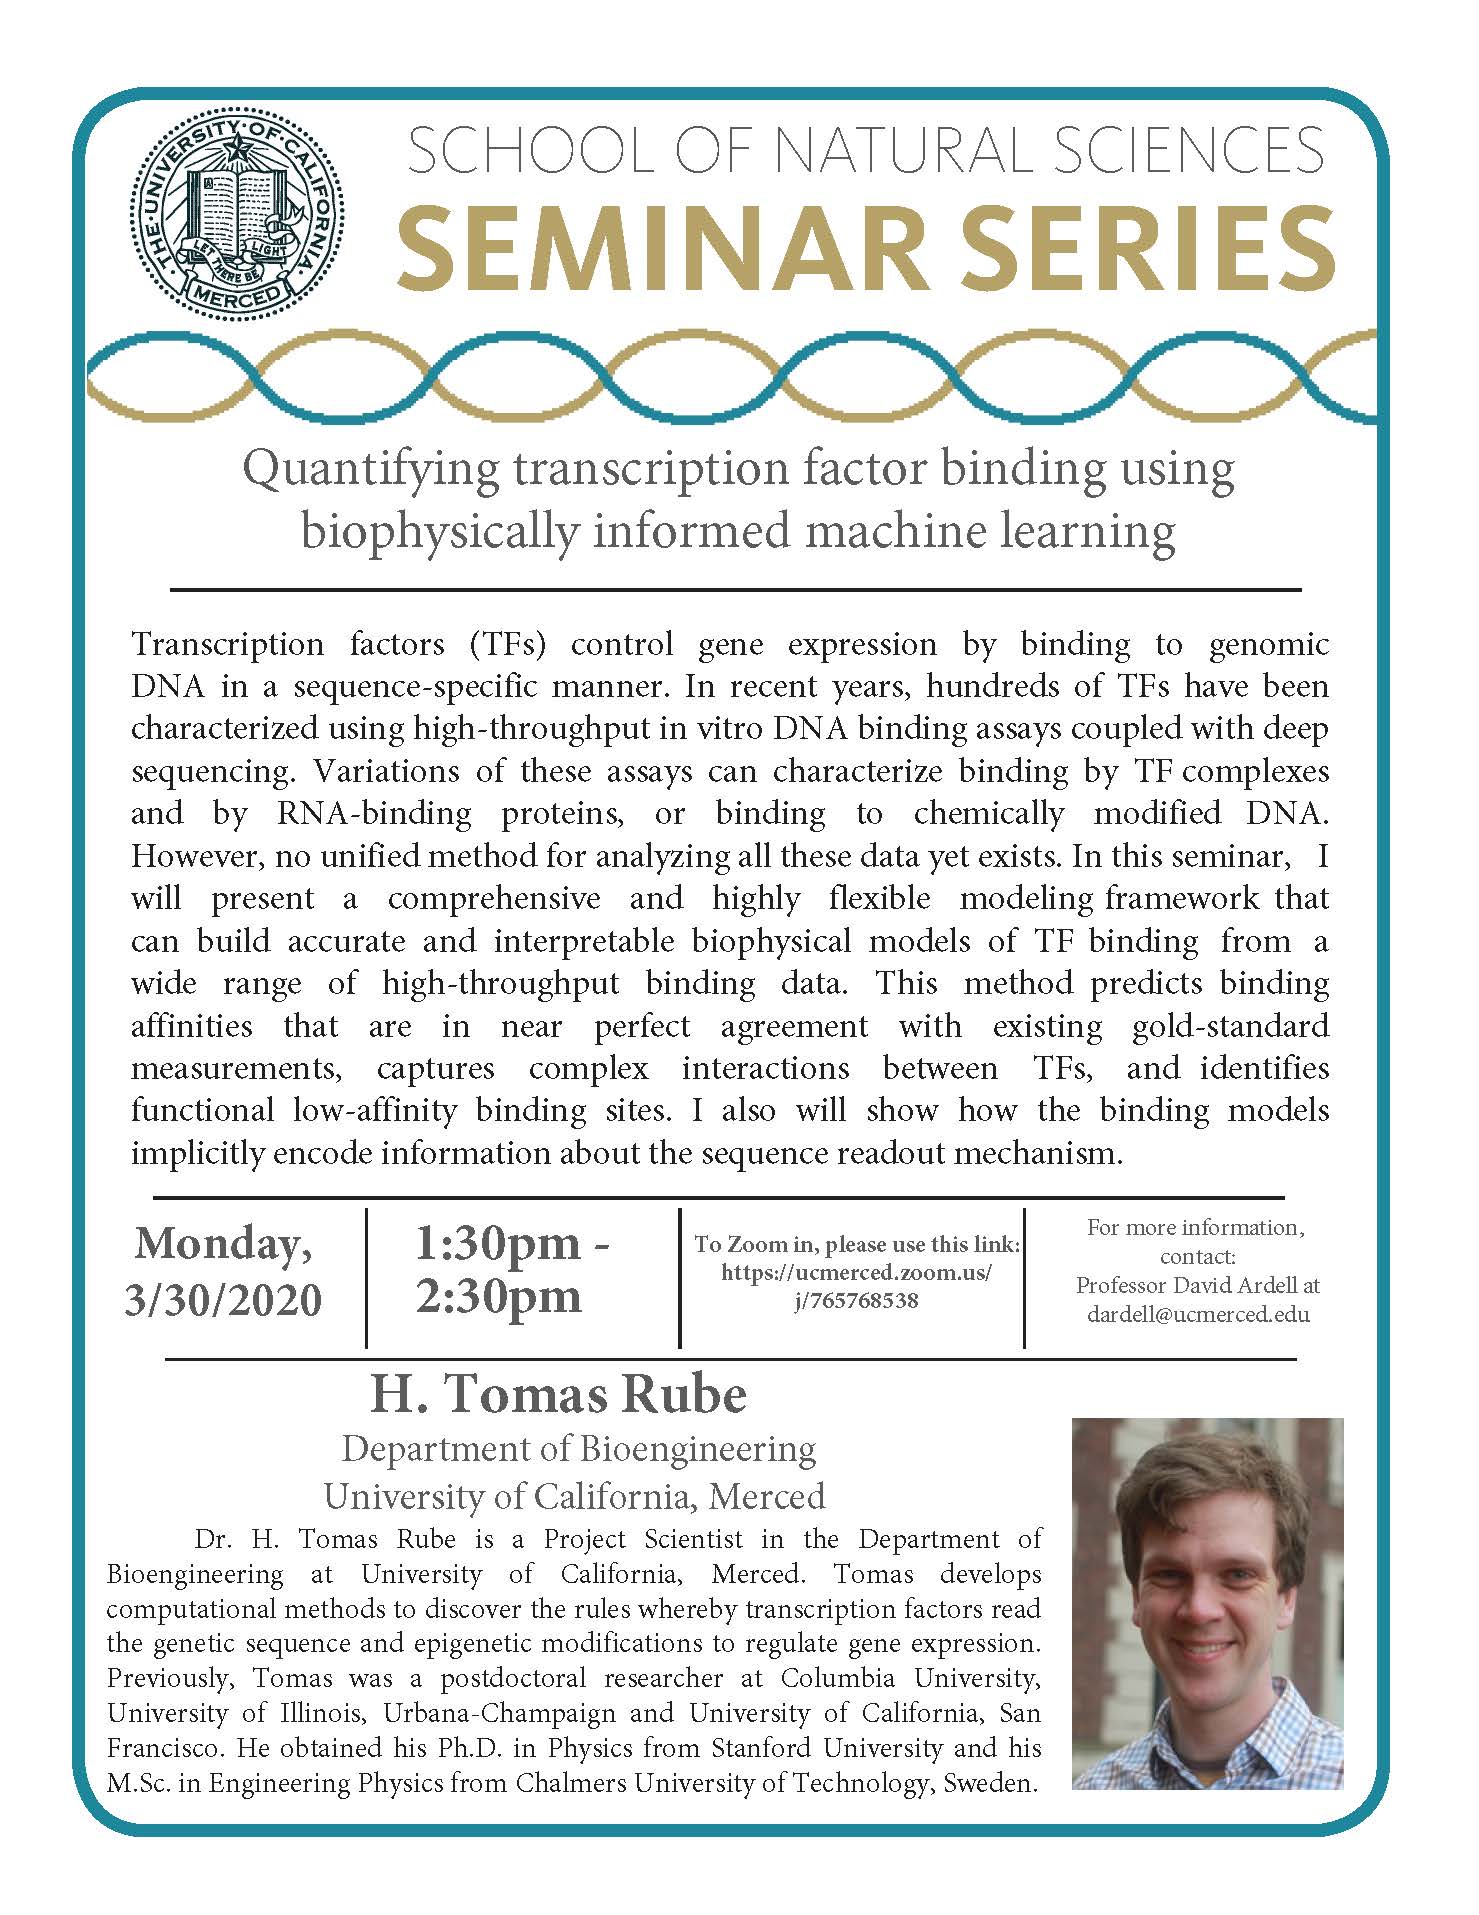 MCB Seminar for Dr. H. Tomas Rube